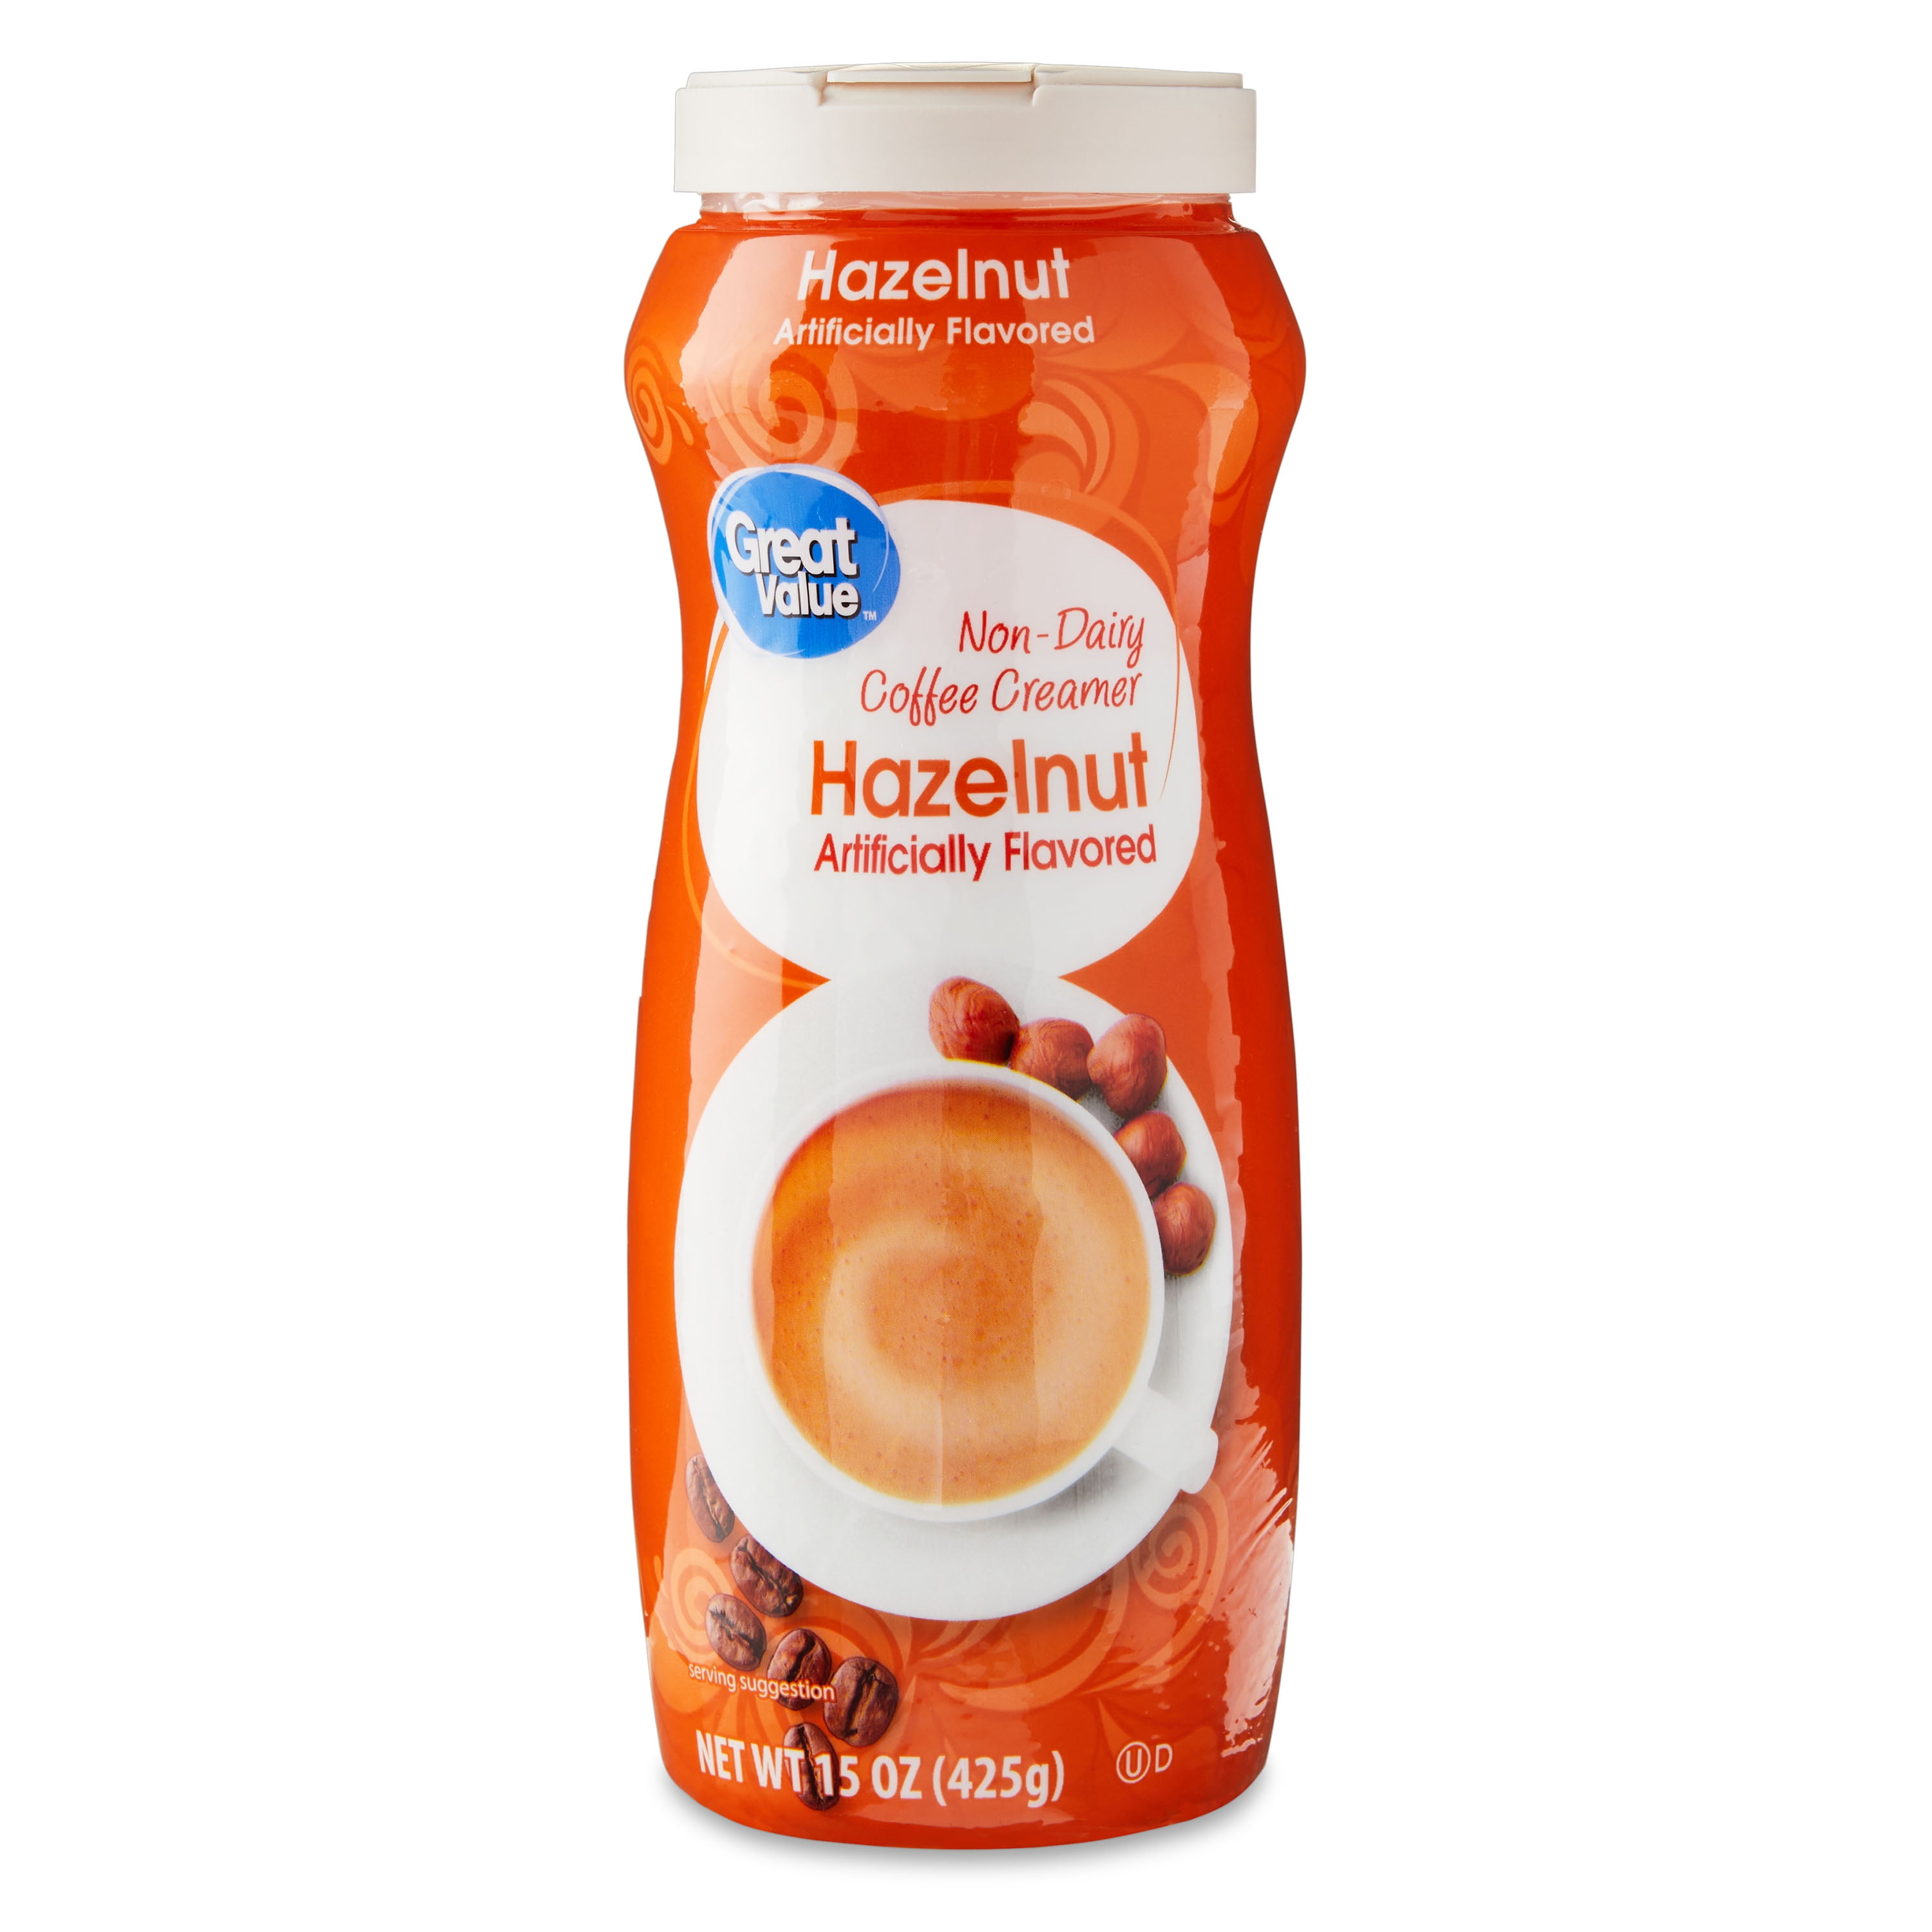 Great Value Non-Dairy Hazelnut Coffee Creamer, 15 oz